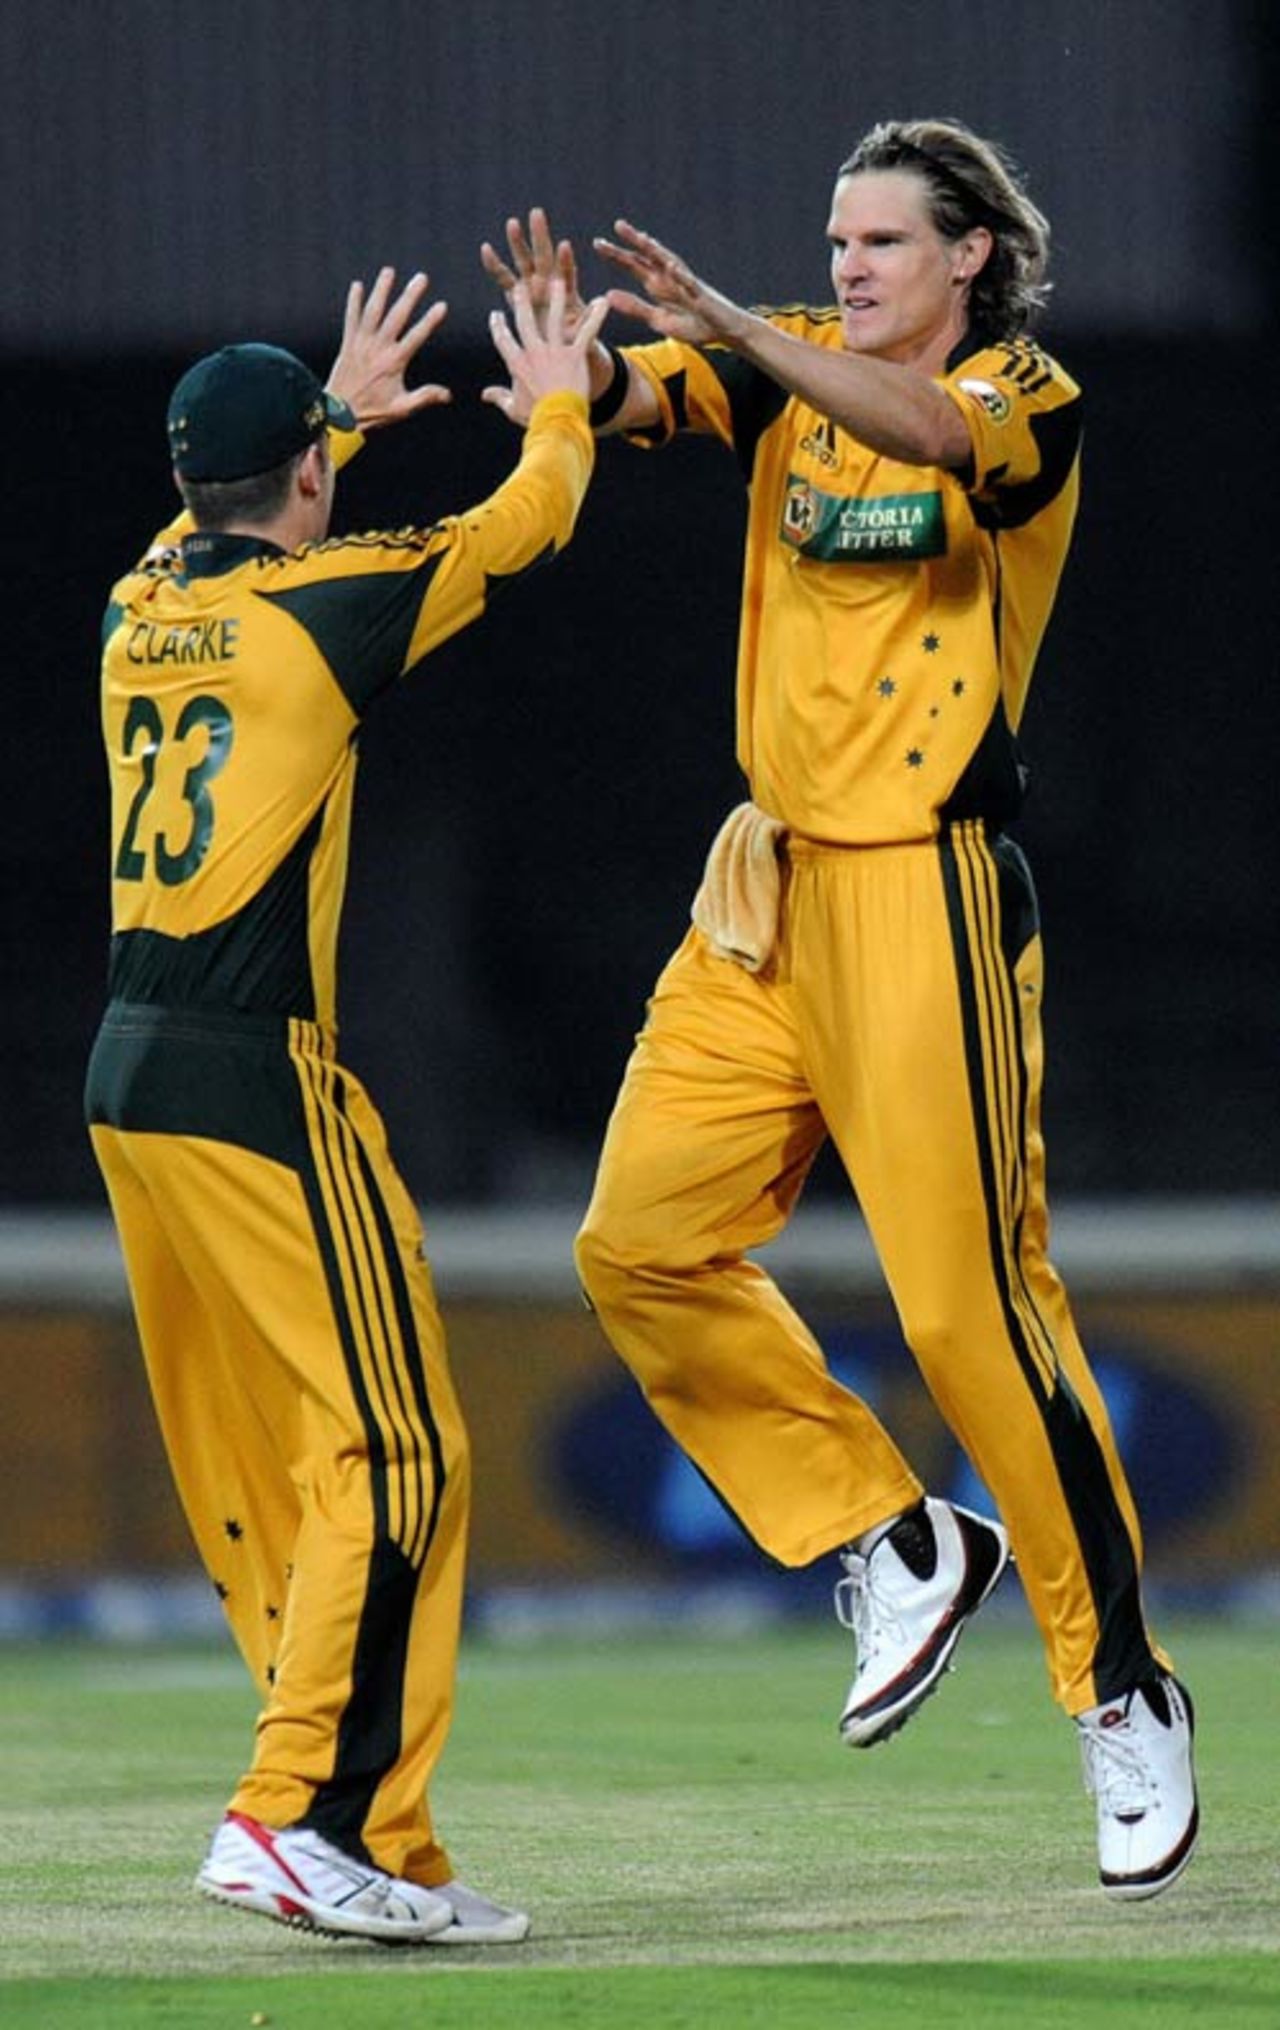 Nathan Bracken and Michael Clarke celebrate the wicket of Graeme Smith, South Africa v Australia, 5th ODI, Johannesburg, April 17, 2009